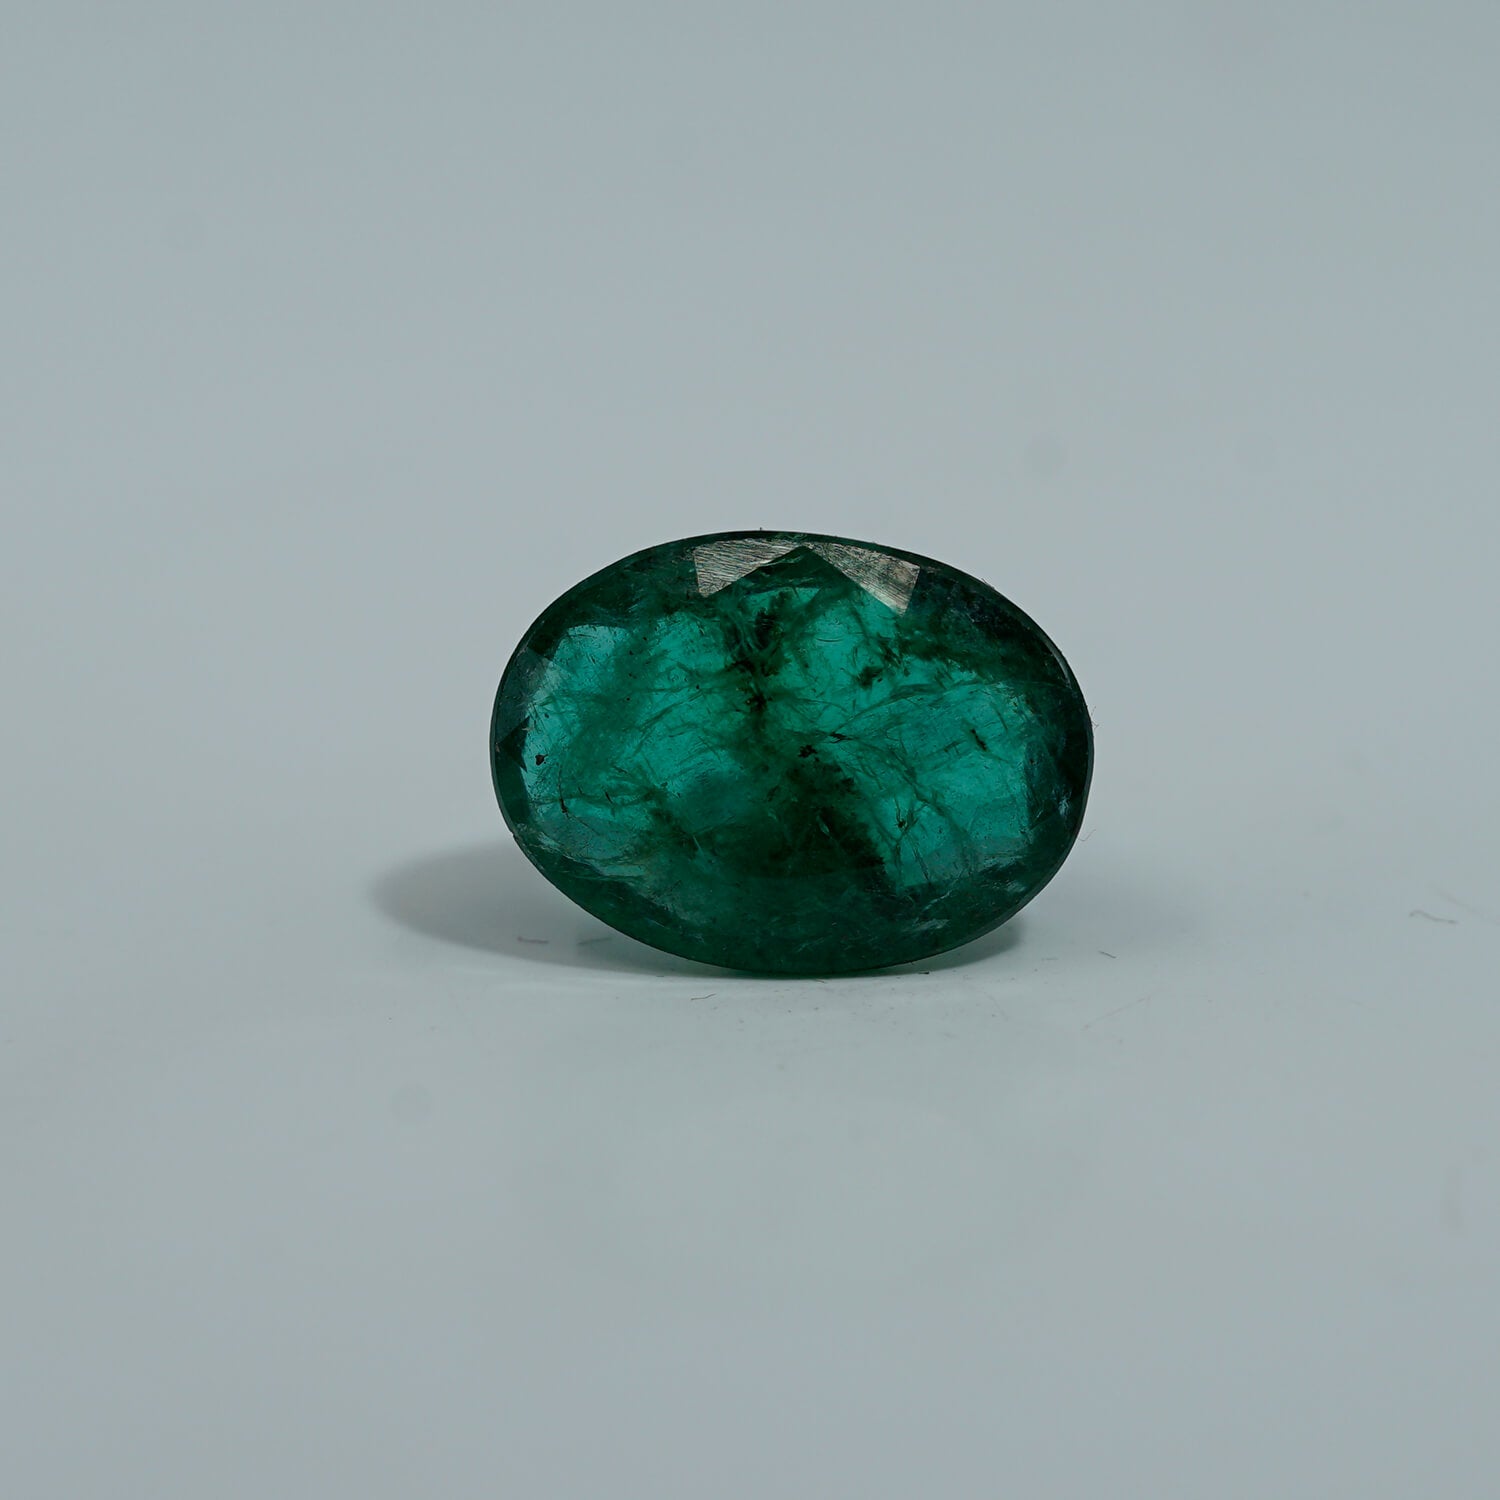 Vedic crystals Zambian Emerald gemstone (Panna nag) best price image 280